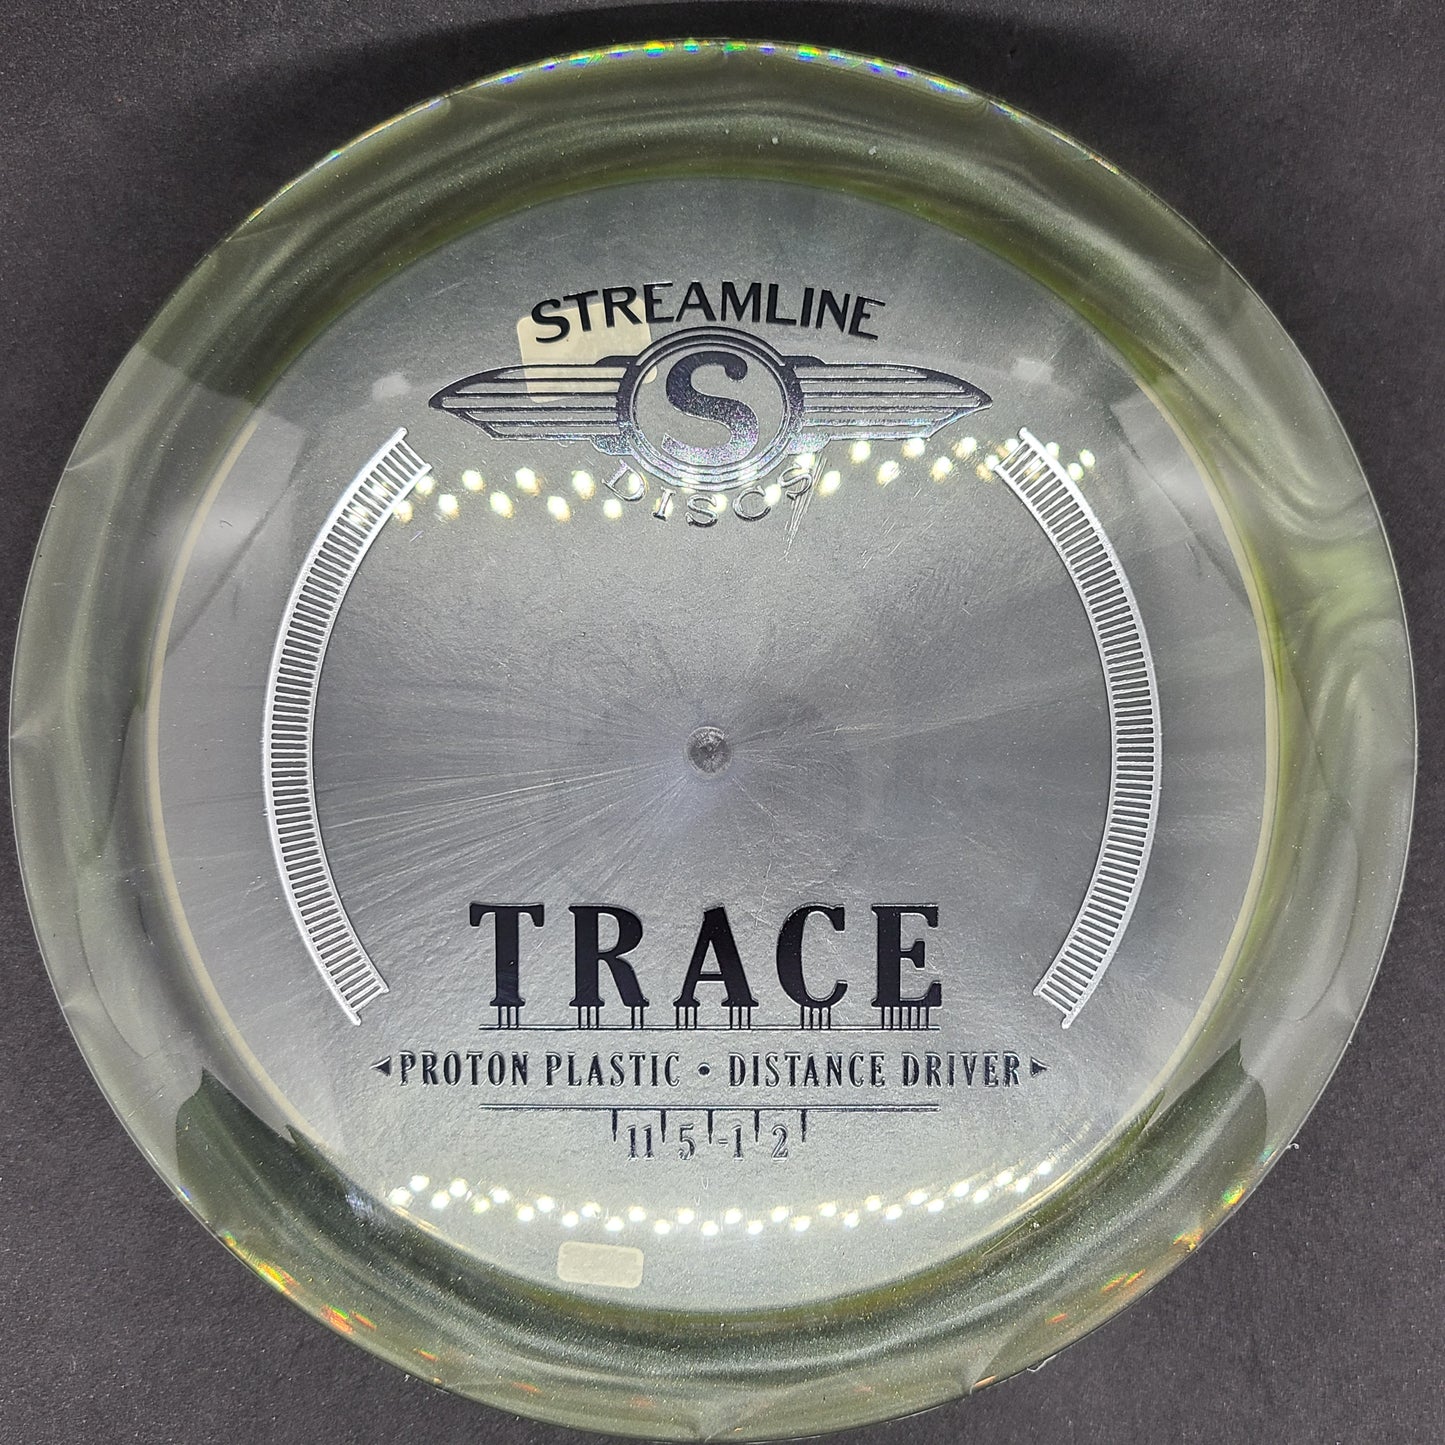 Streamline - Trace - Proton